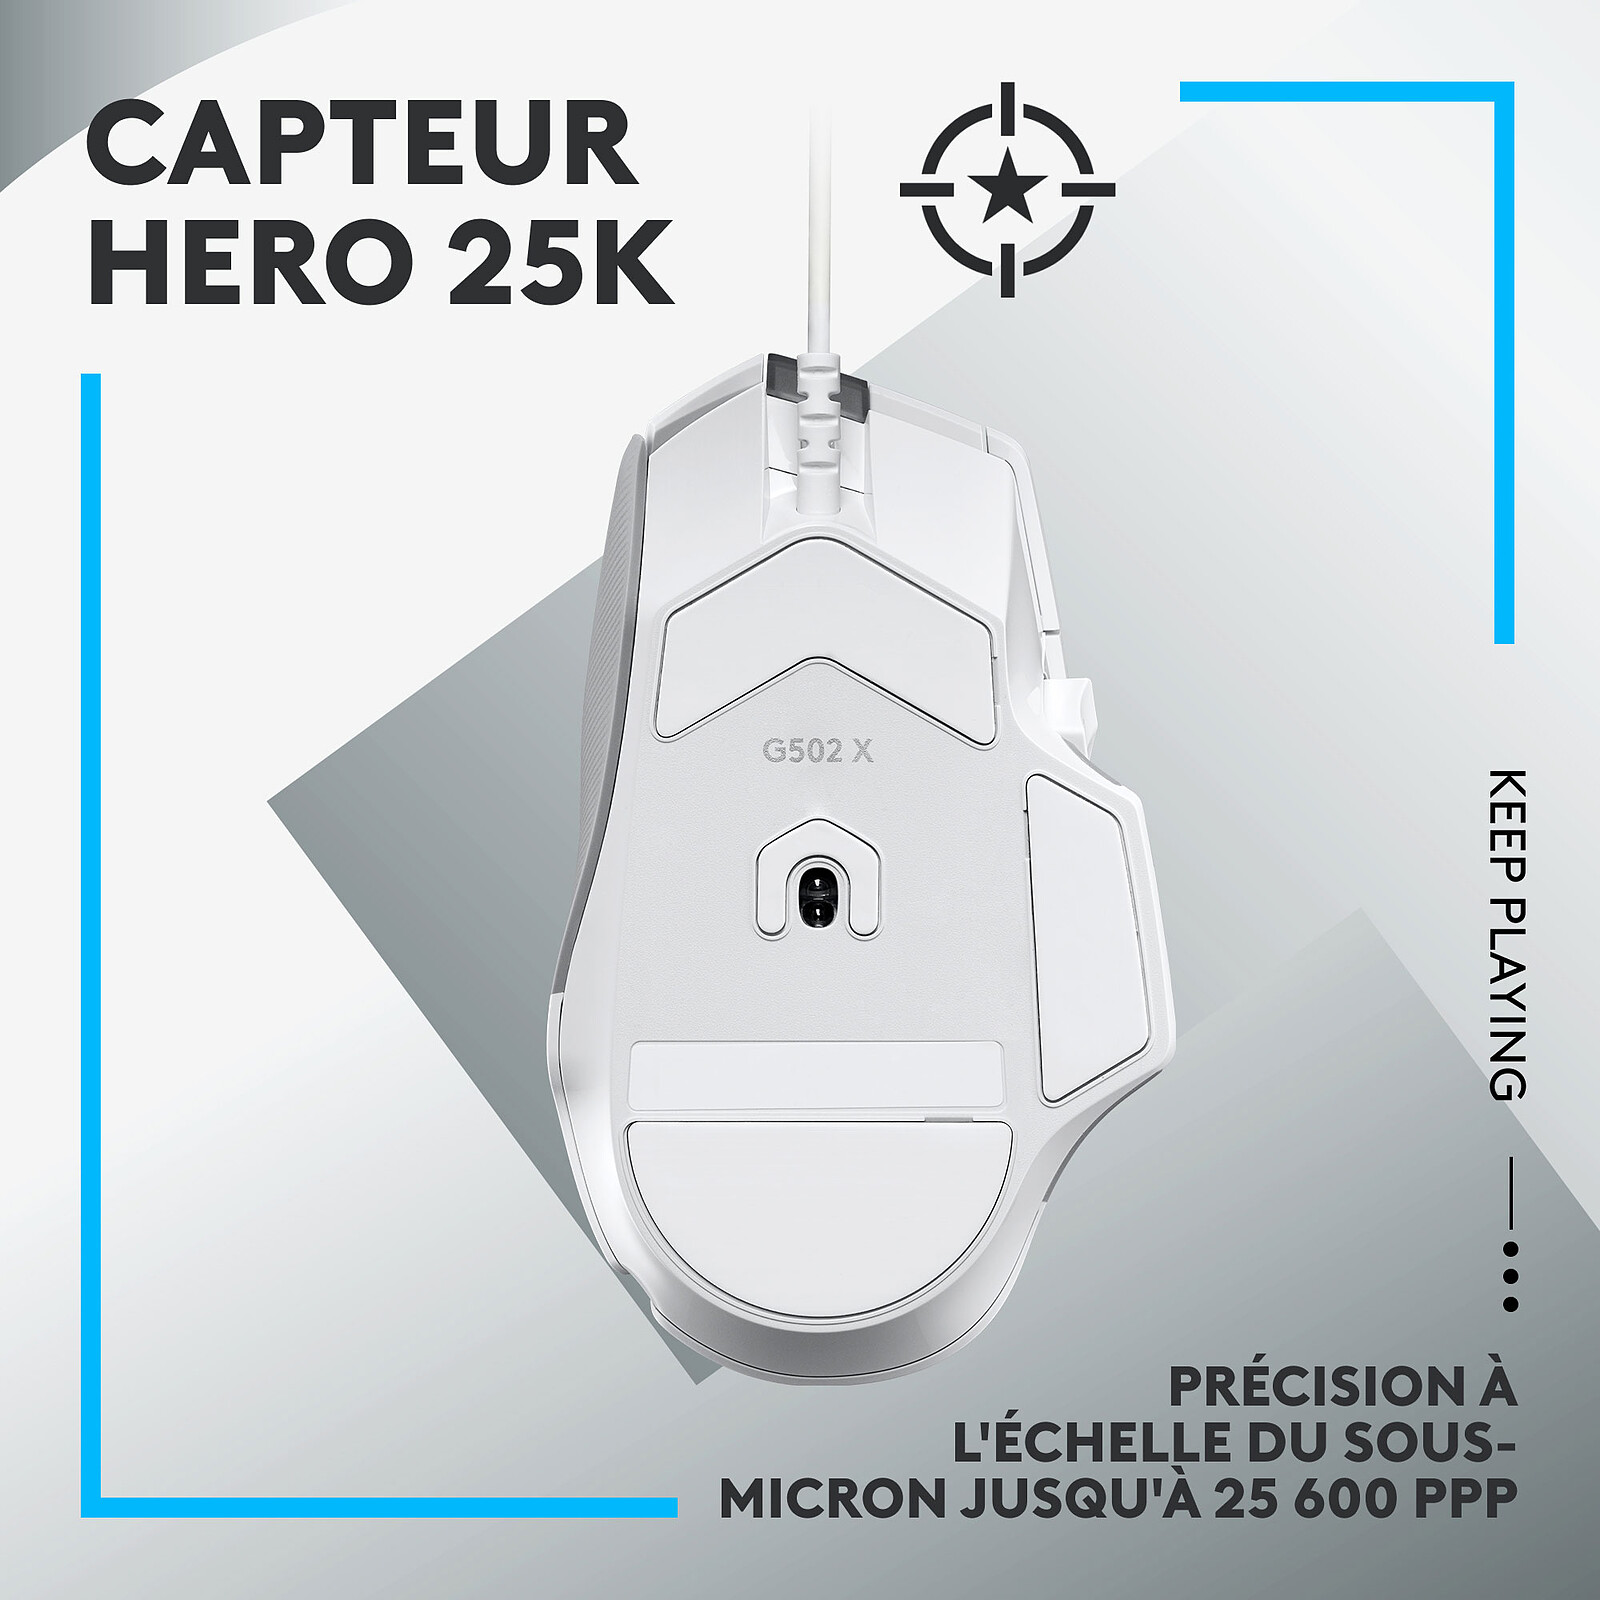 Souris filaire Logitech G G502 X - capteur gaming HERO 25K